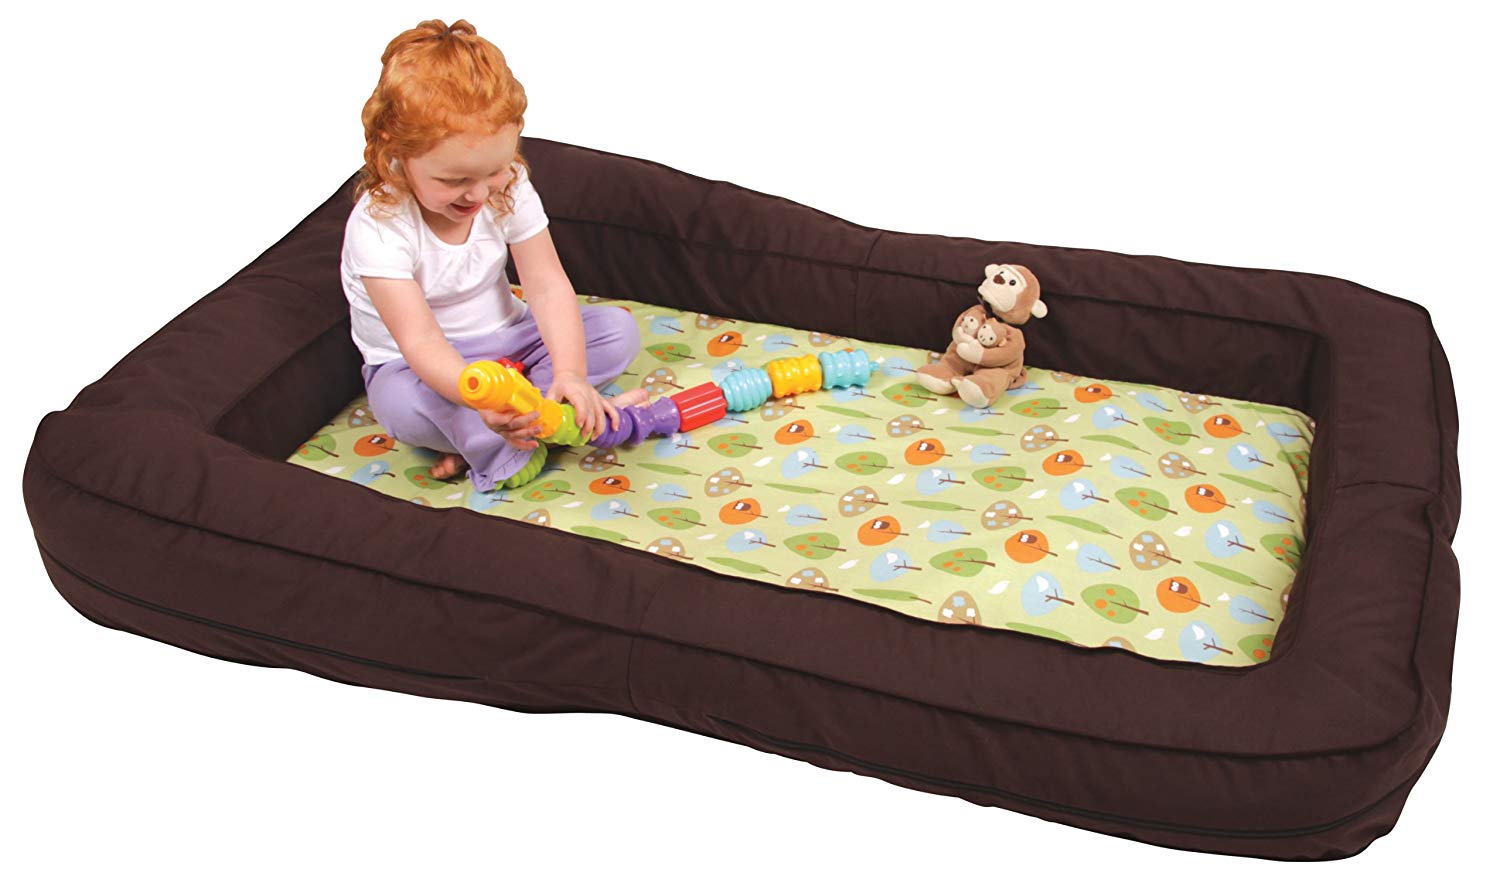 mattress for a toddler bed